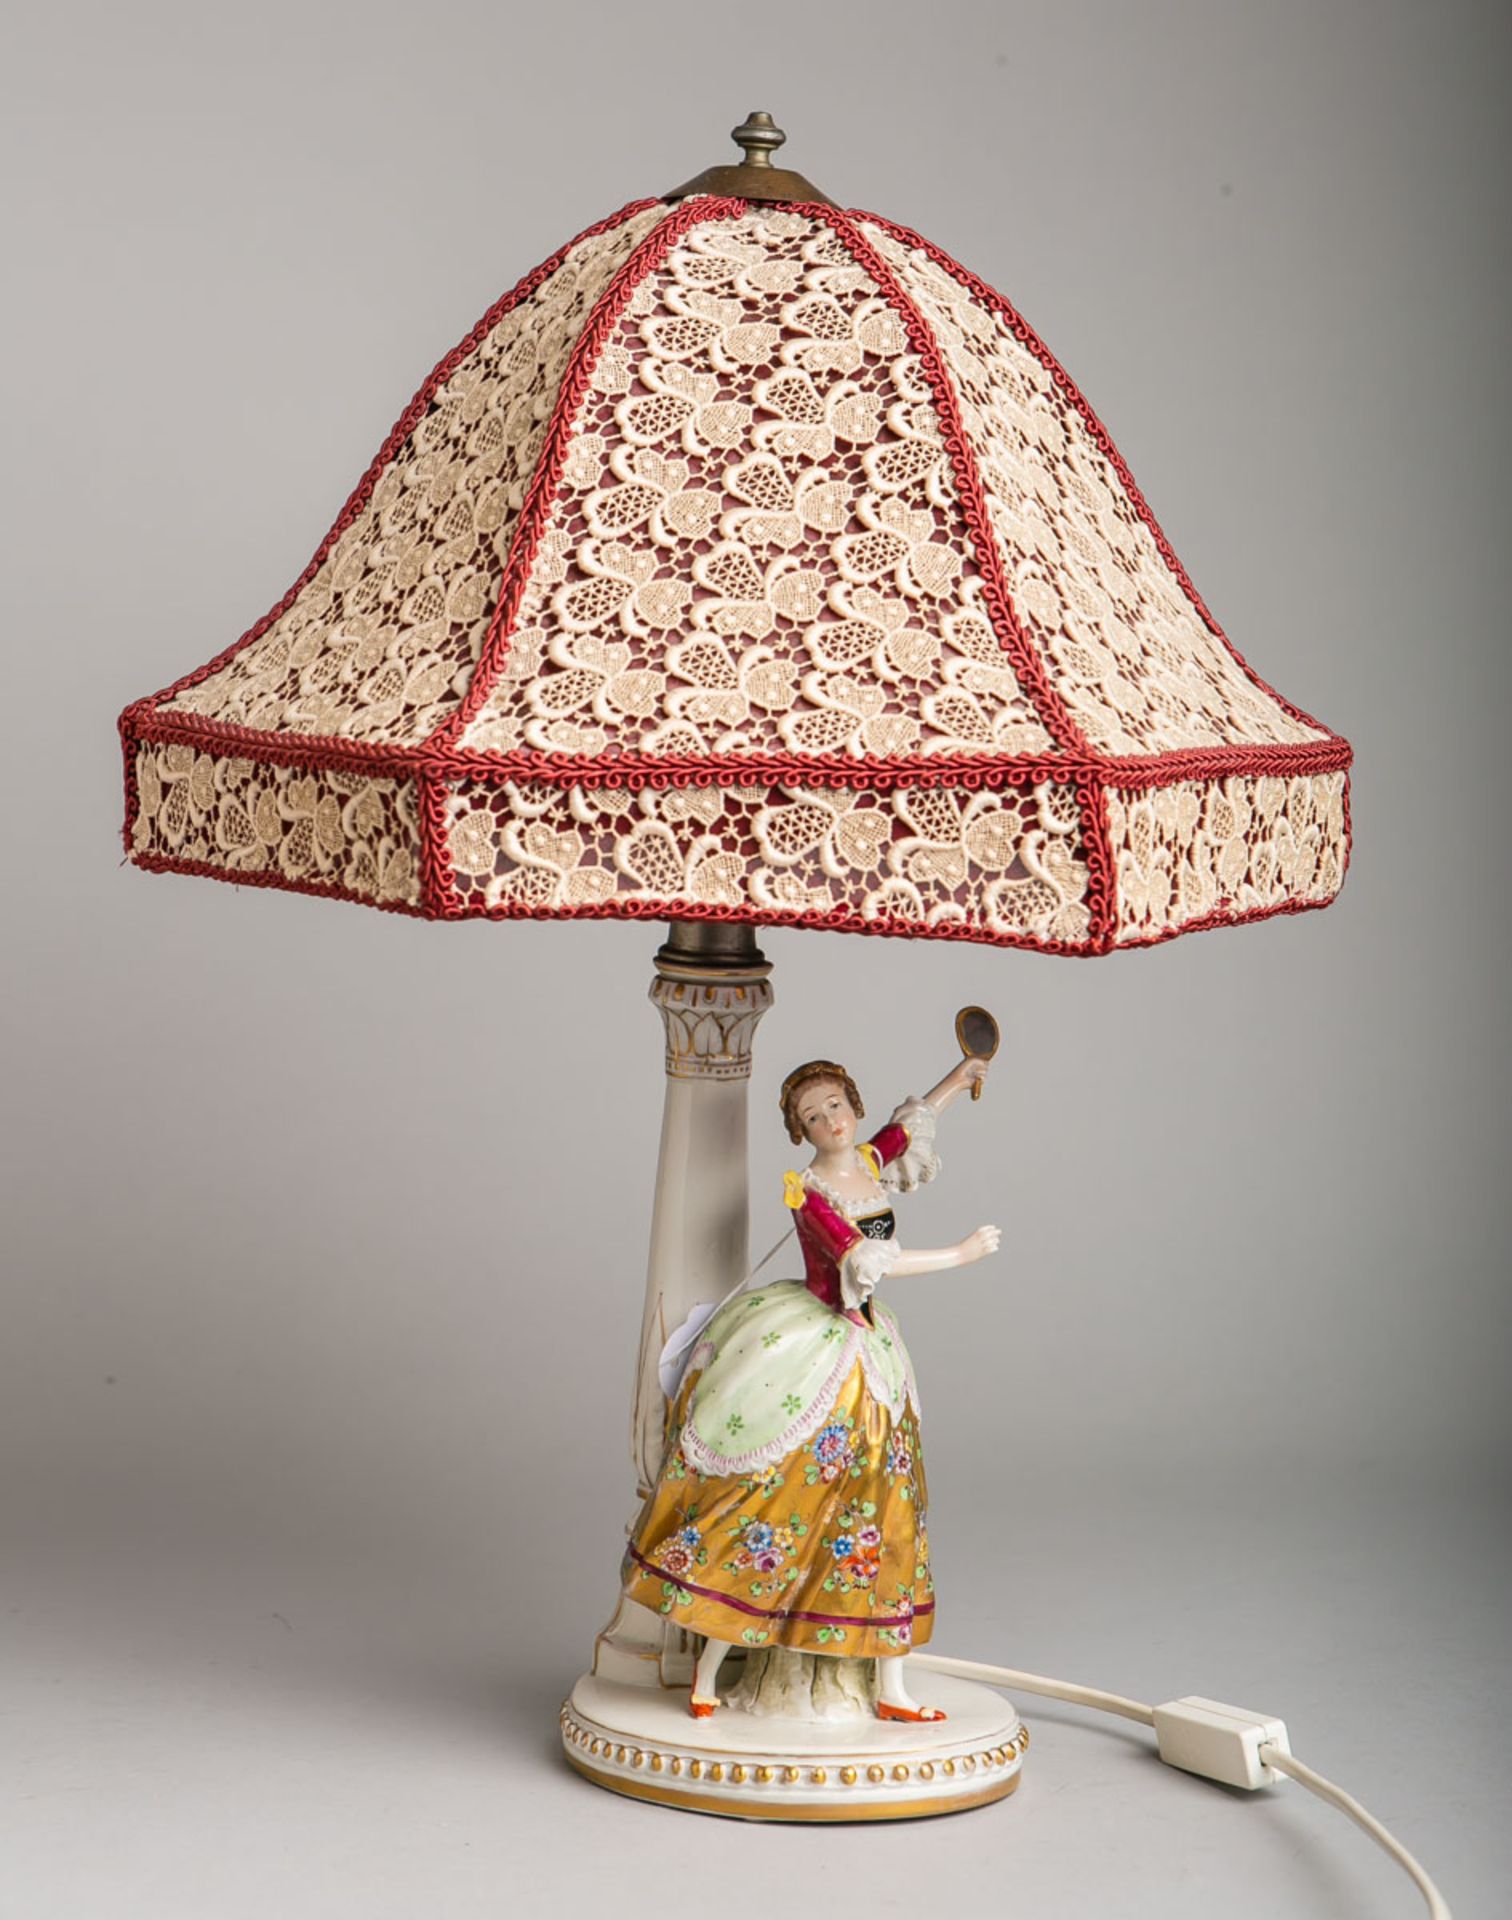 Lampe m. Figurine (Rudolstadt, 20. Jh.)